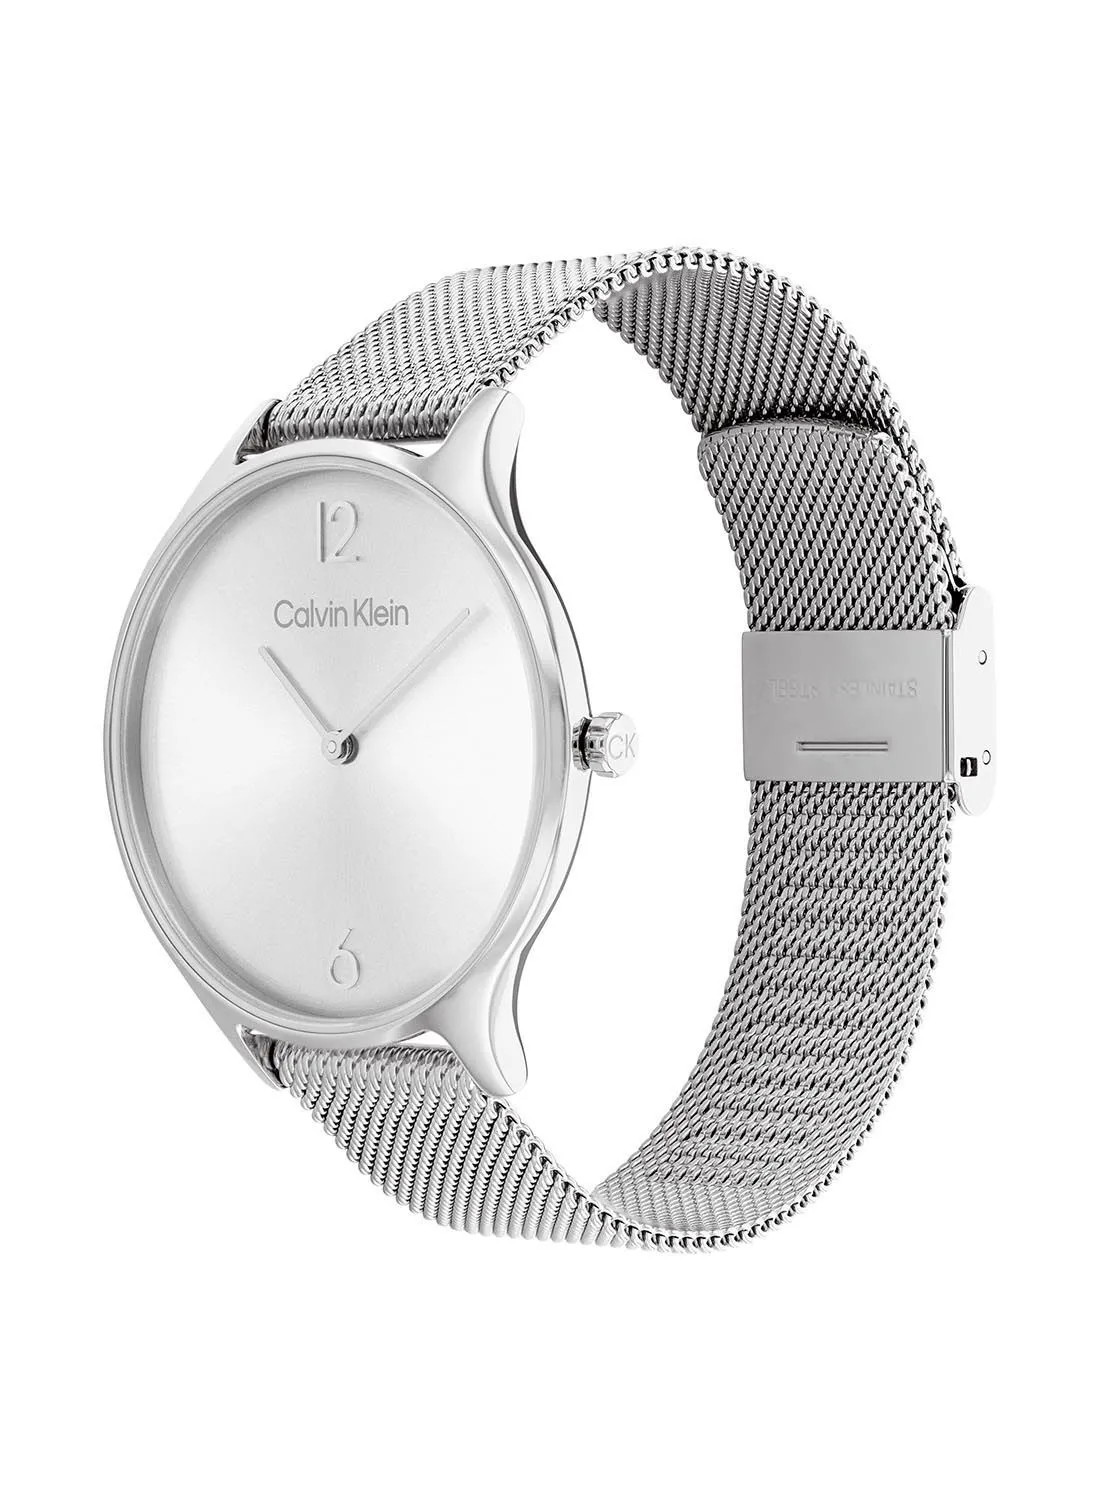 CALVIN KLEIN Analog Round Waterproof  Wrist Watch With Stainless Steel 25200001